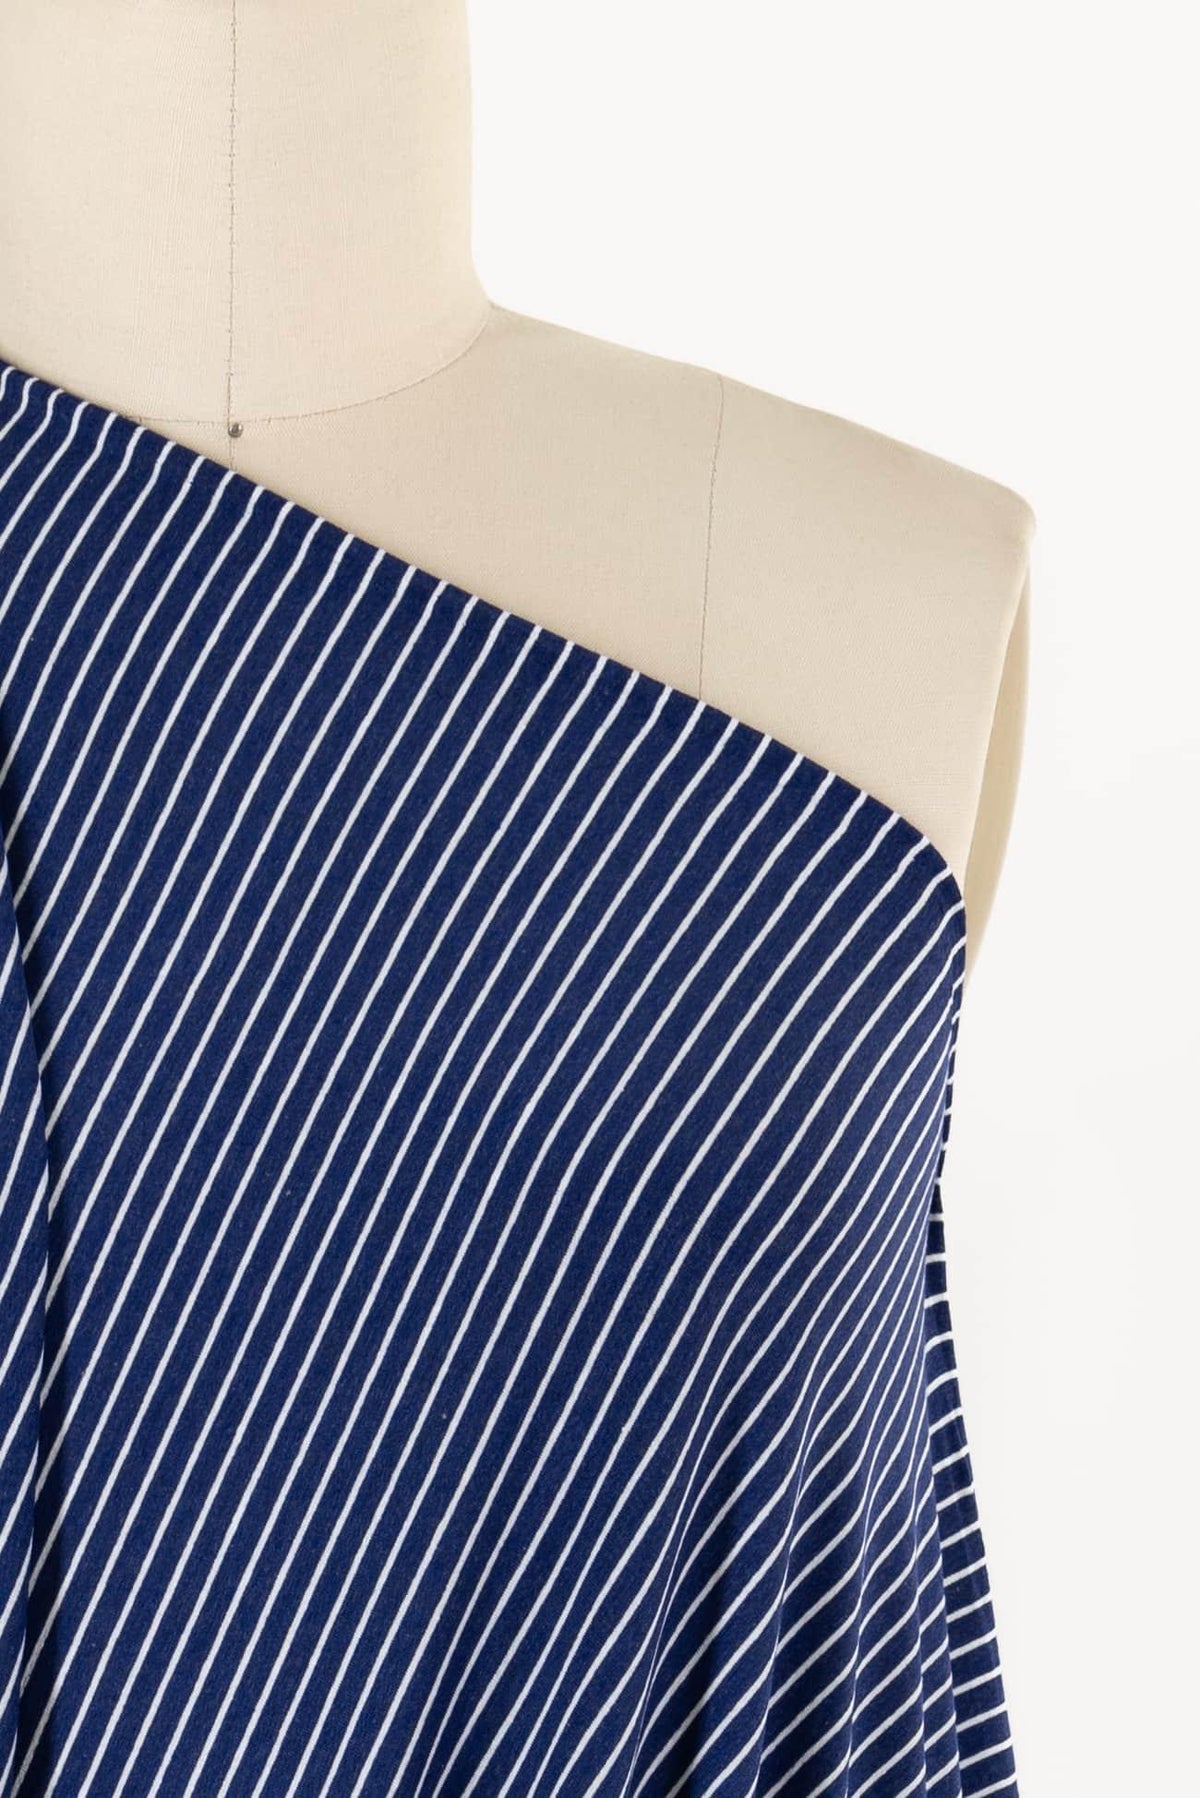 Avon Stripe USA Knit - Marcy Tilton Fabrics